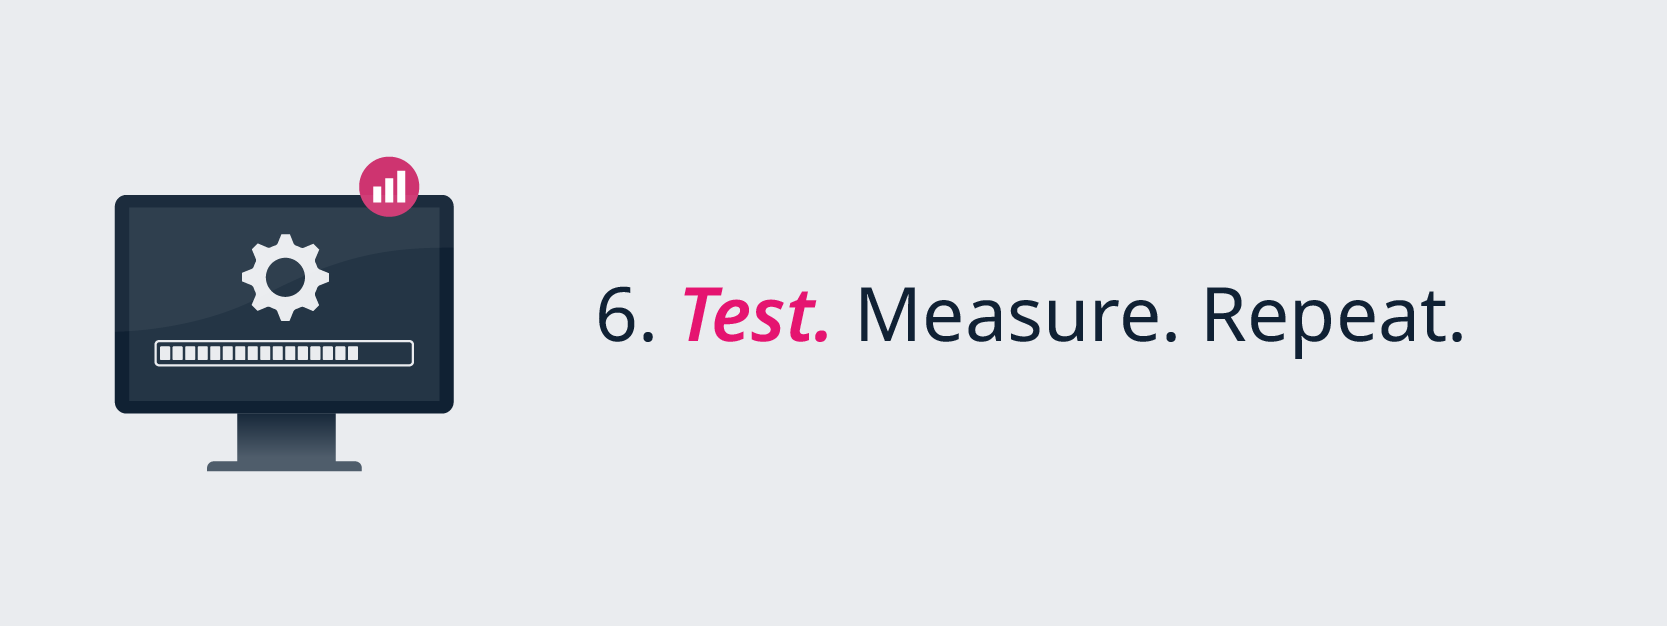 Step 6 towards successful digital transformation: Test. Measure. Repeat.